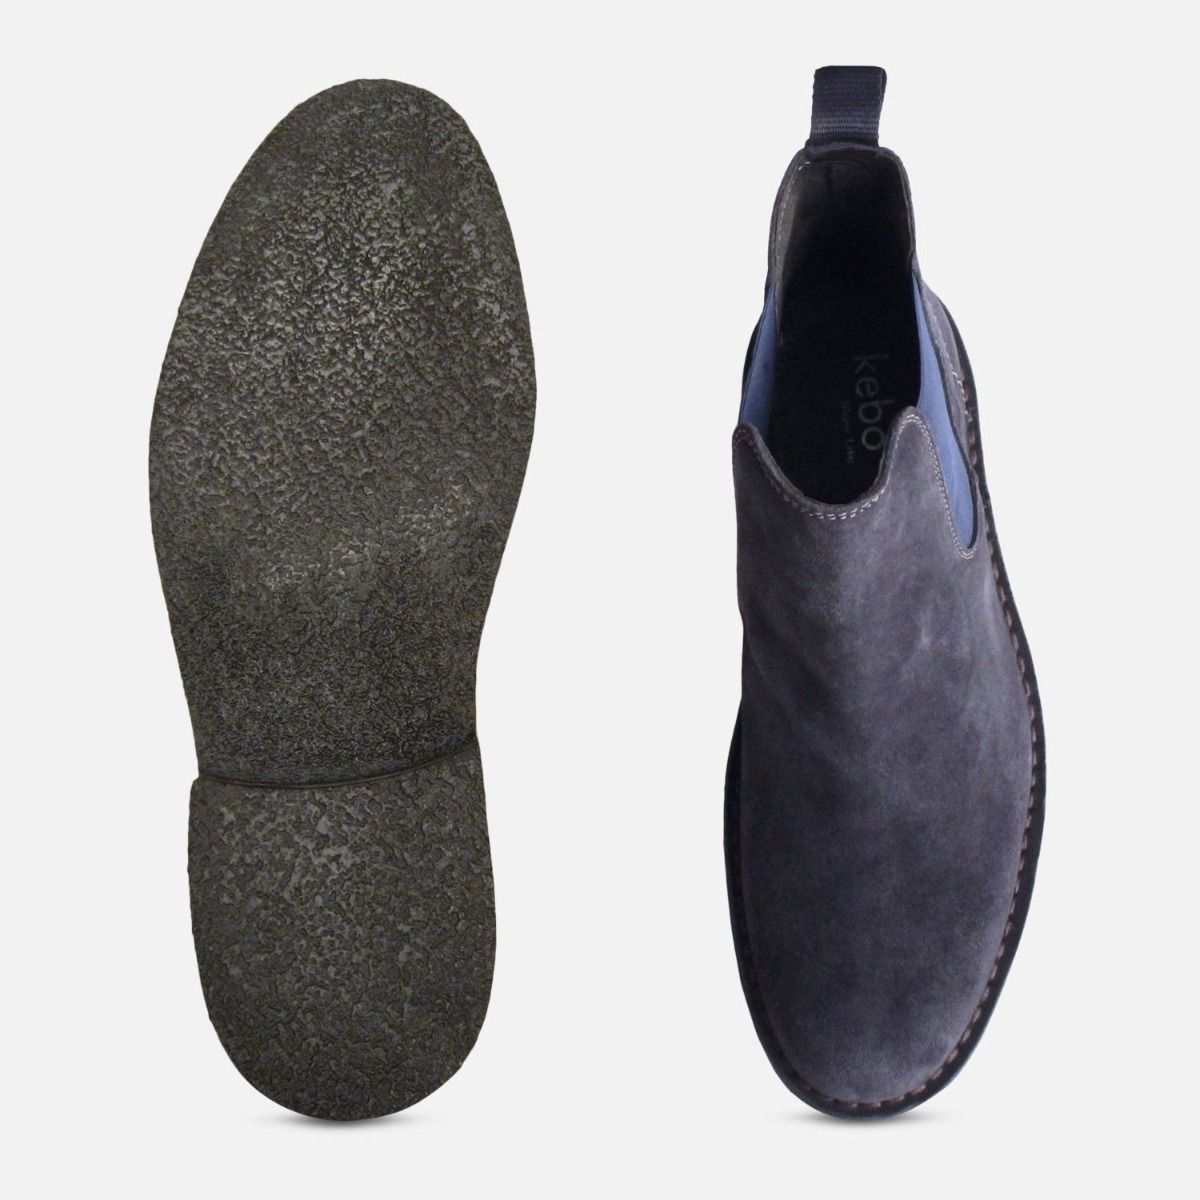 New Navy Blue Suede Plain Chelsea Boots for Men